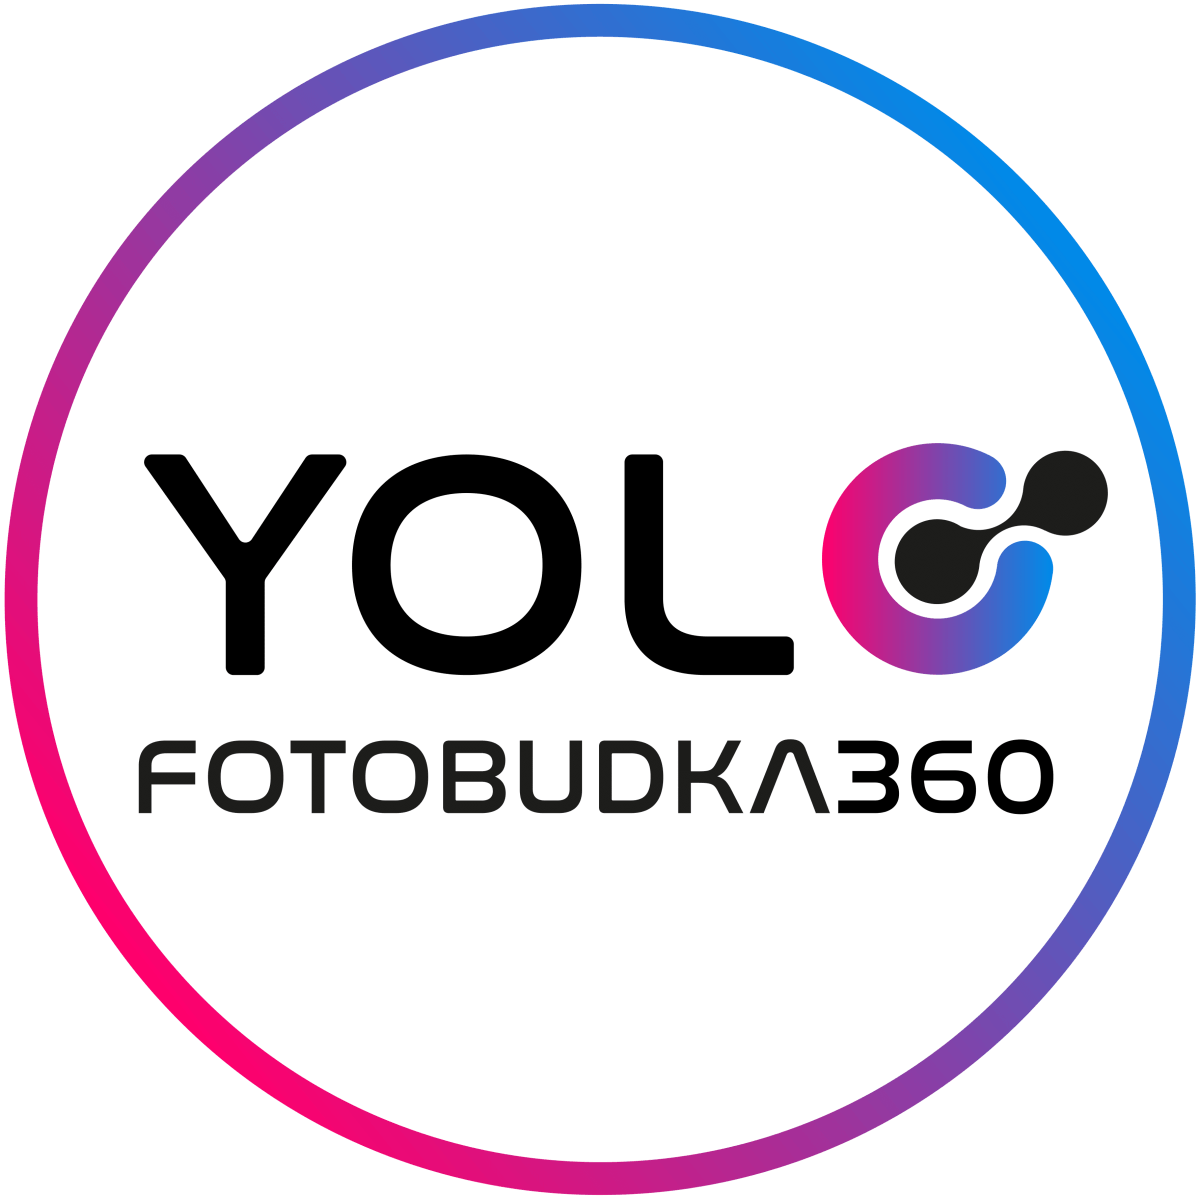 YOLO fotobudka360